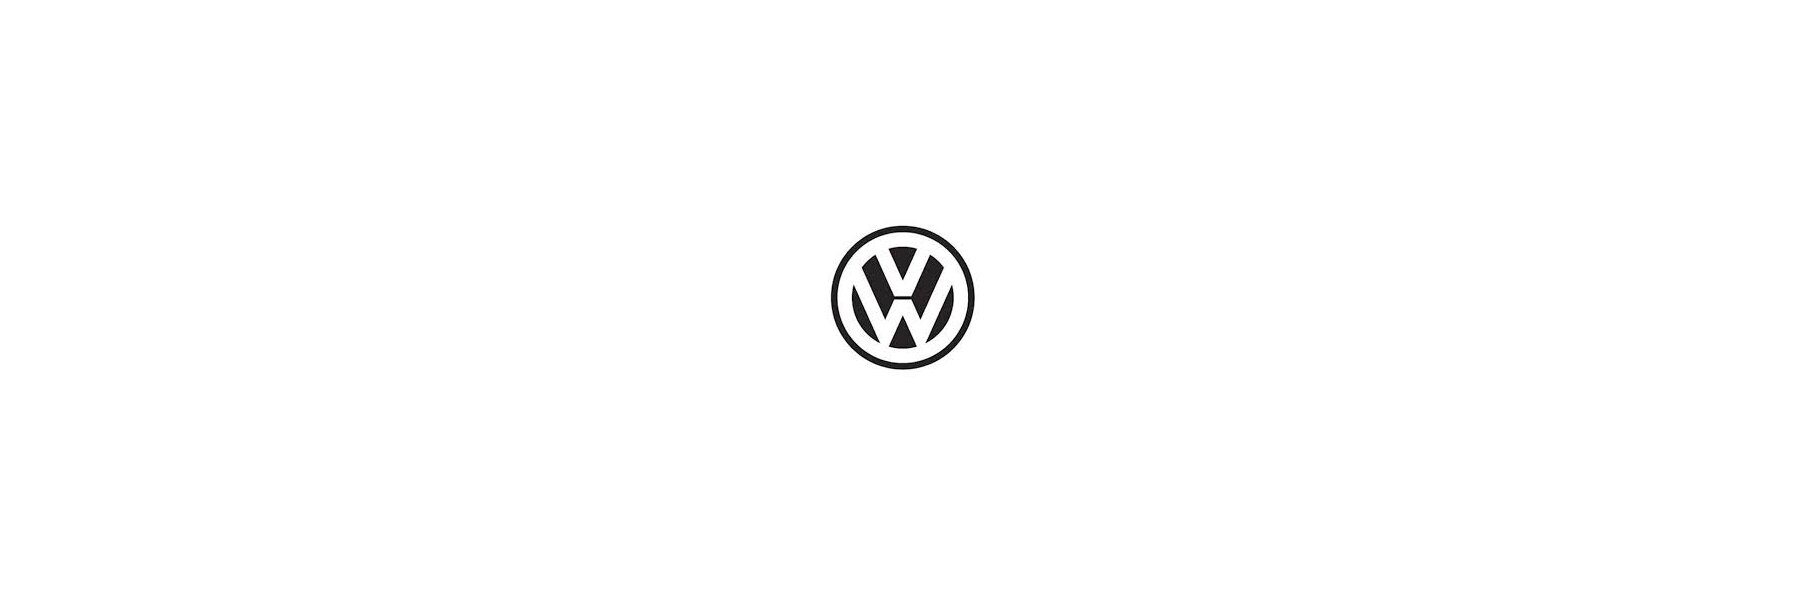 Passform Sitzbezug Robusto für VW Golf VII Comfortline 08/2012-03/2021, 1  Rücksitzbankbezug für Normalsitze, Sitzbezüge für VW Golf 7, Sitzbezüge  für Volkswagen, Sitzbezüge nach Autotyp filtern